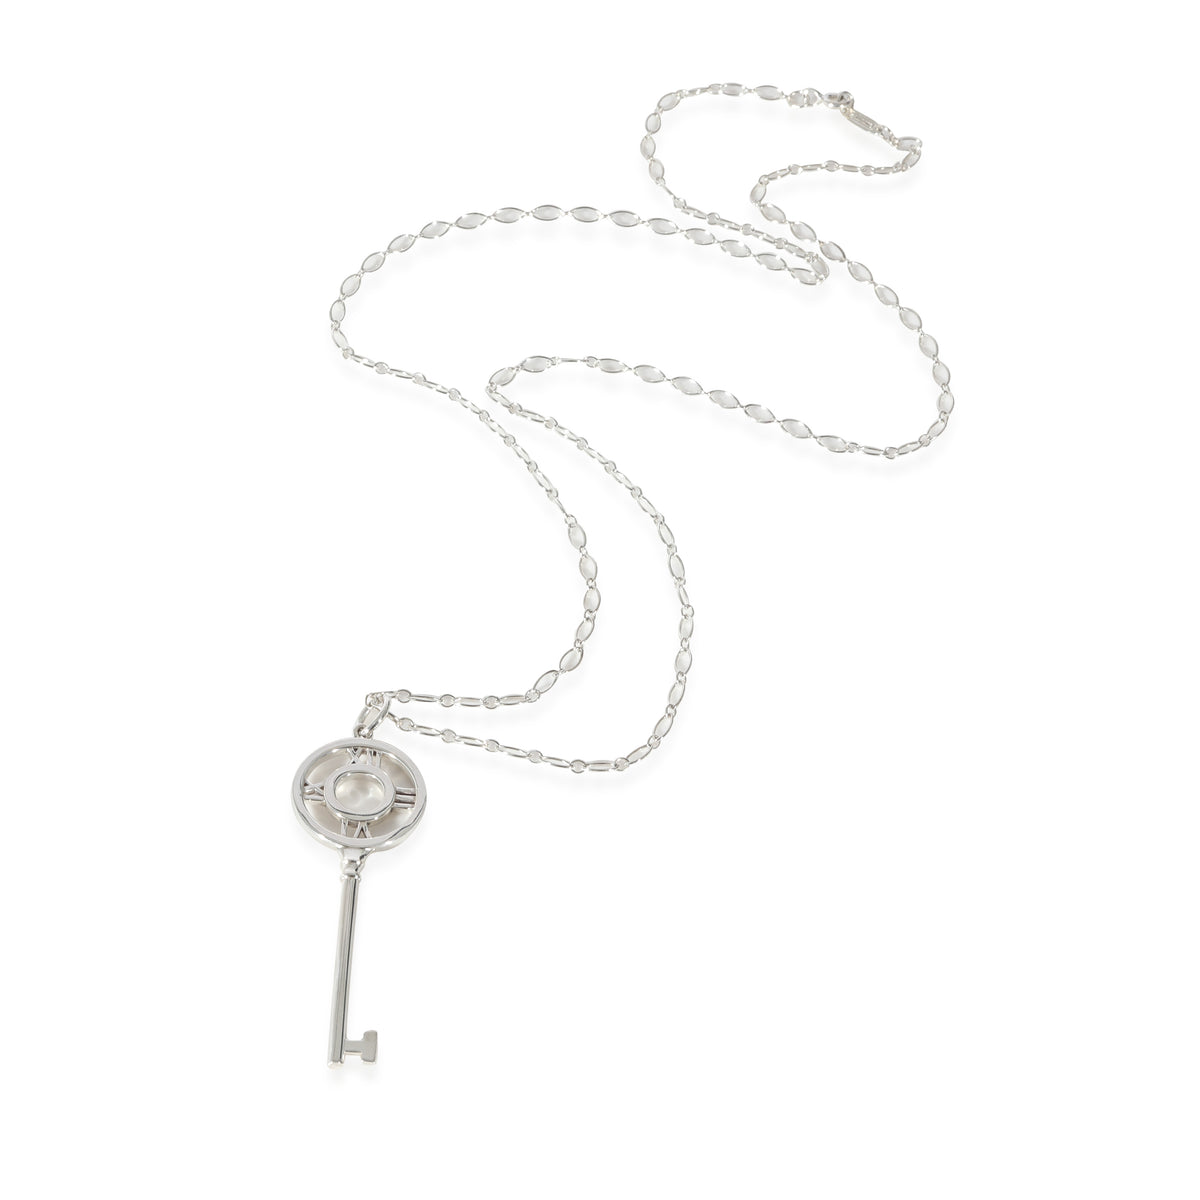 Tiffany & Co. Atlas Key Pendant On an Oval Link Chain in Sterling Silver